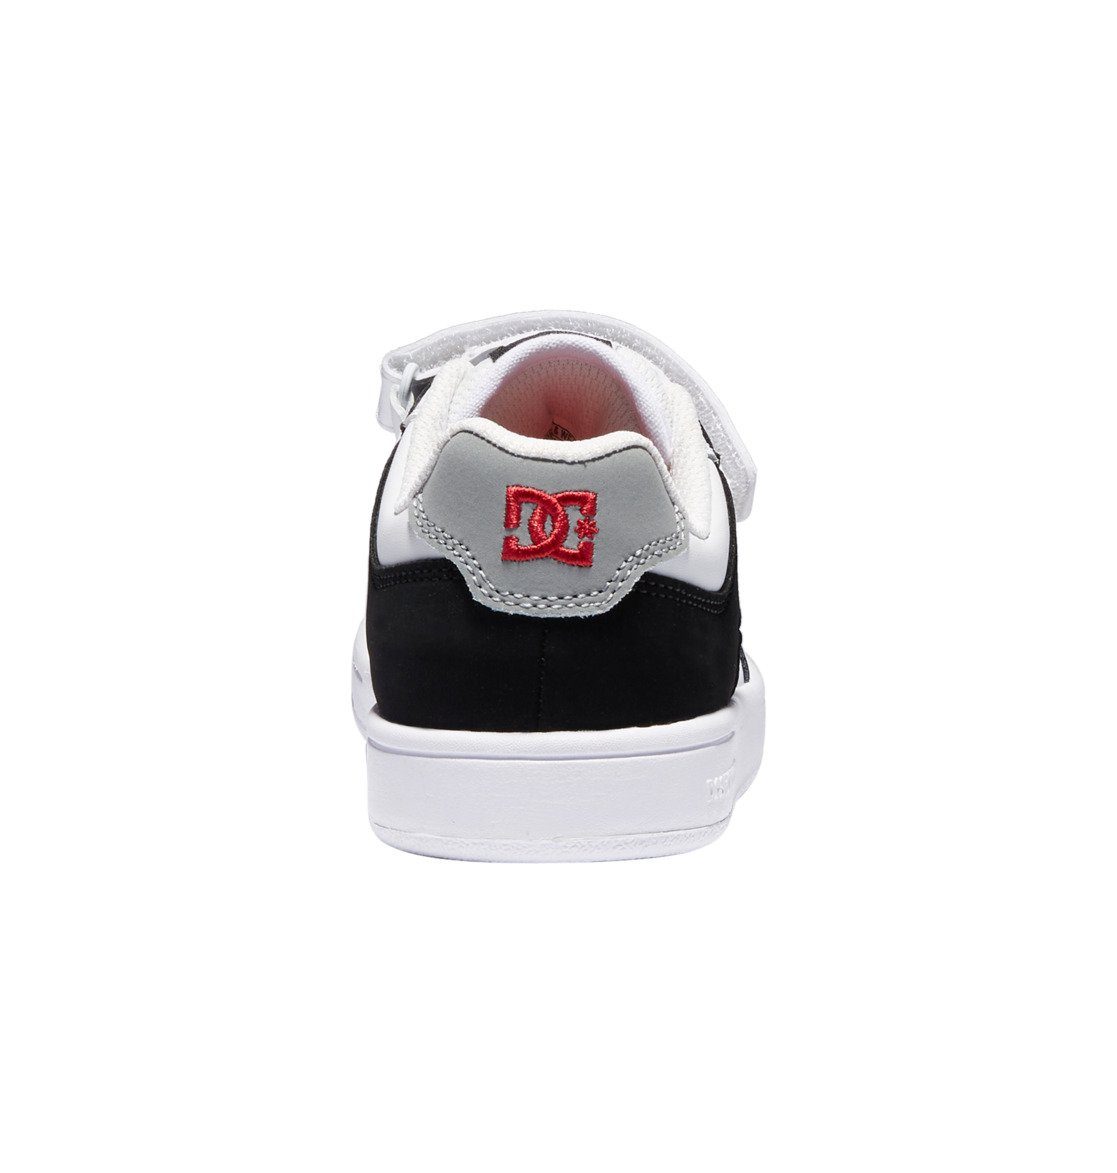 Manteca Shoes V 4 DC Black/White/Red Sneaker